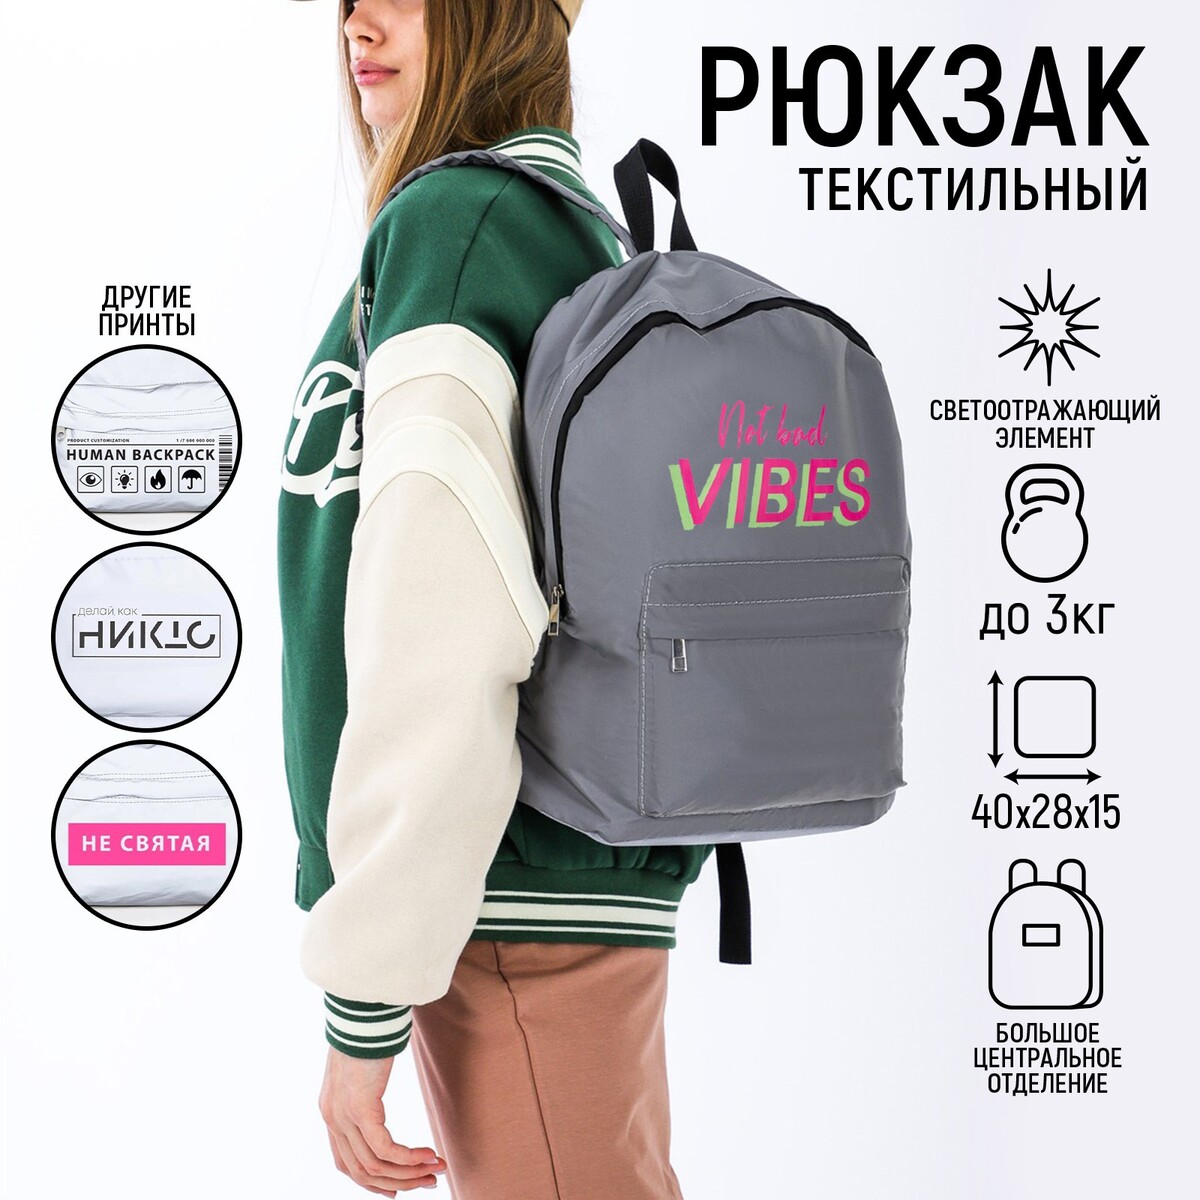 Рюкзак текстильный светоотражающий, not bad vibes, 42 х 30 х 12см